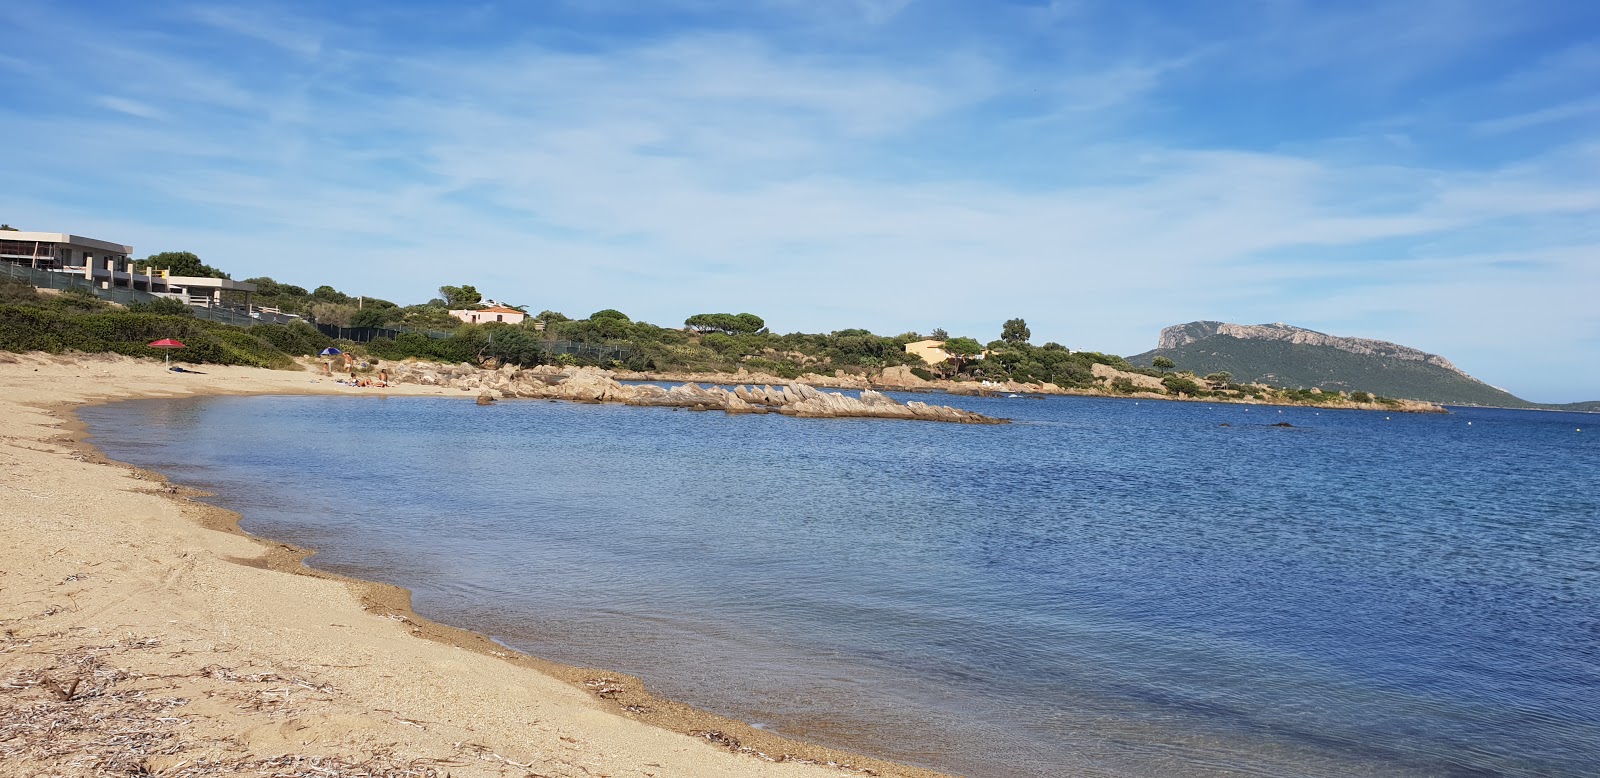 Foto van Spiaggia S'abba e sa Pedra met kleine baai